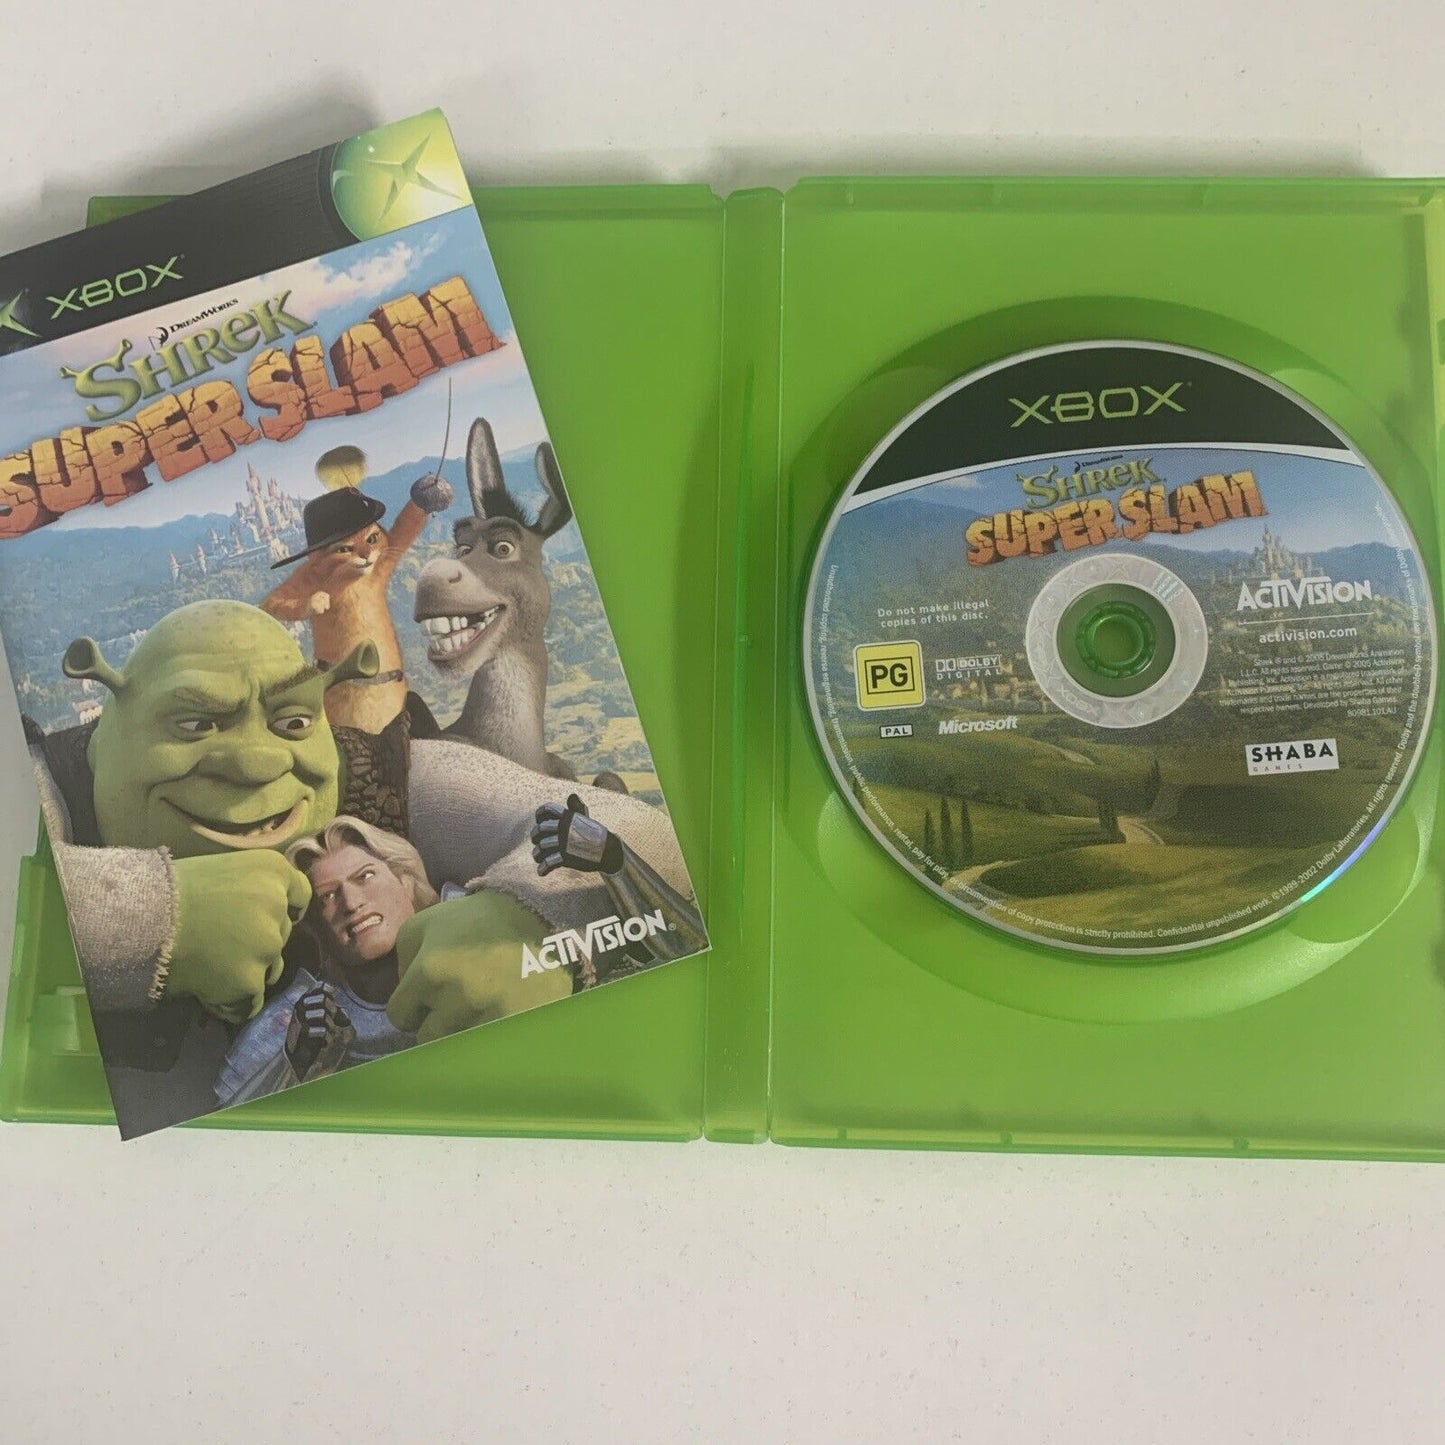 Shrek Super Slam Xbox Original Game